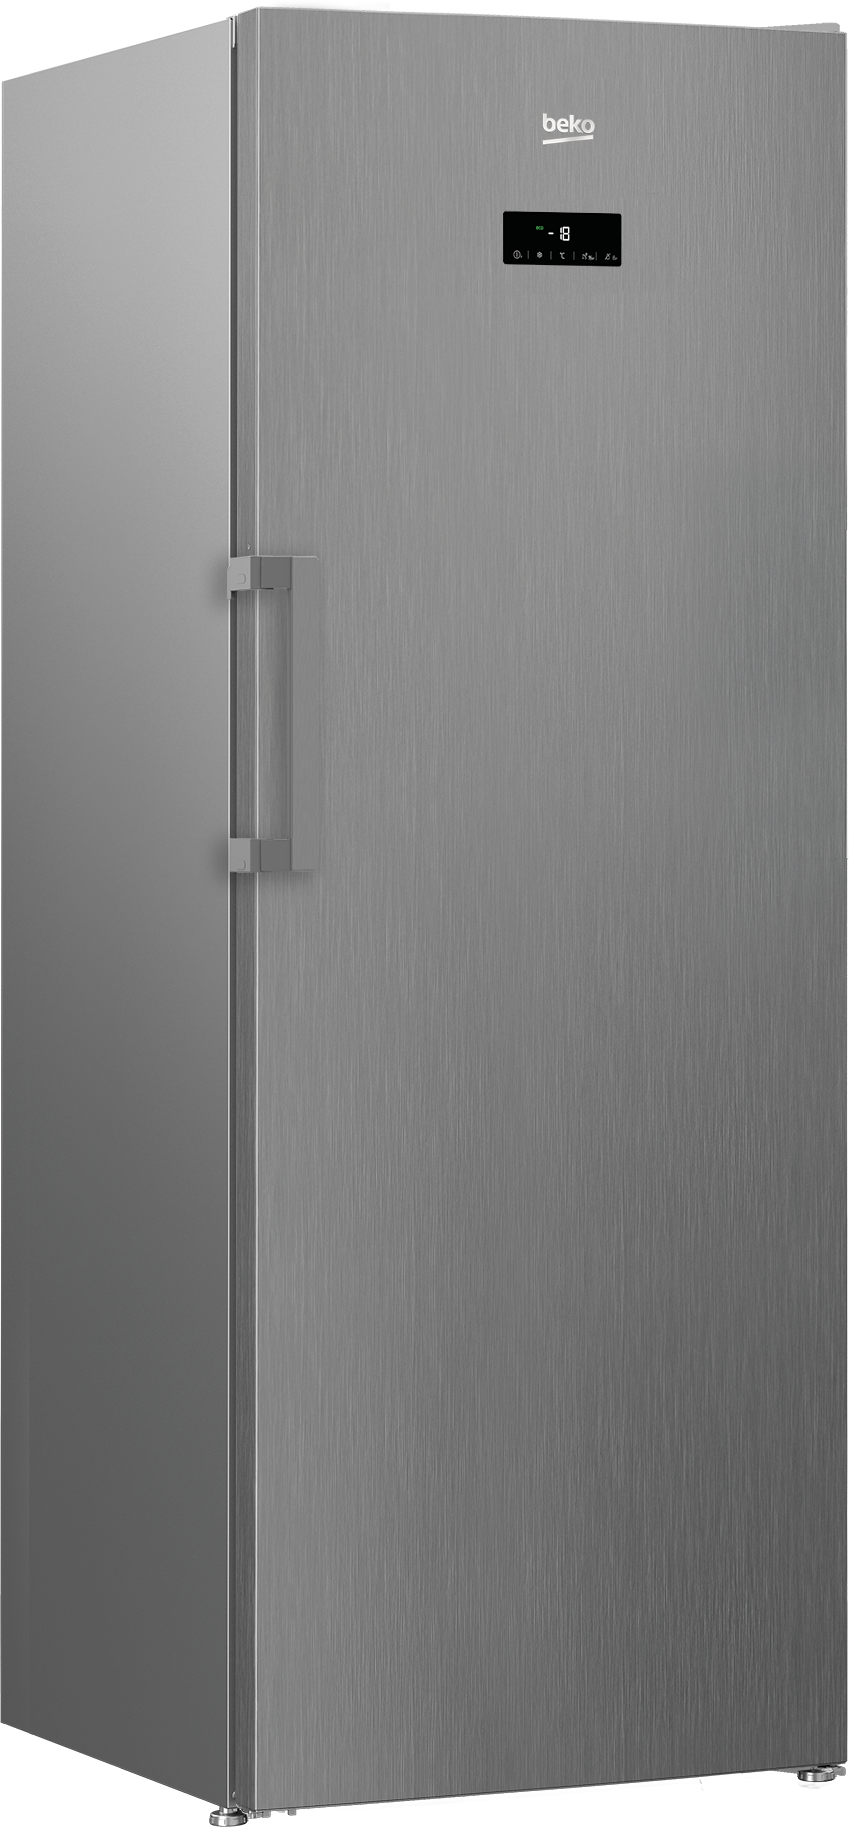 silver fridge side view